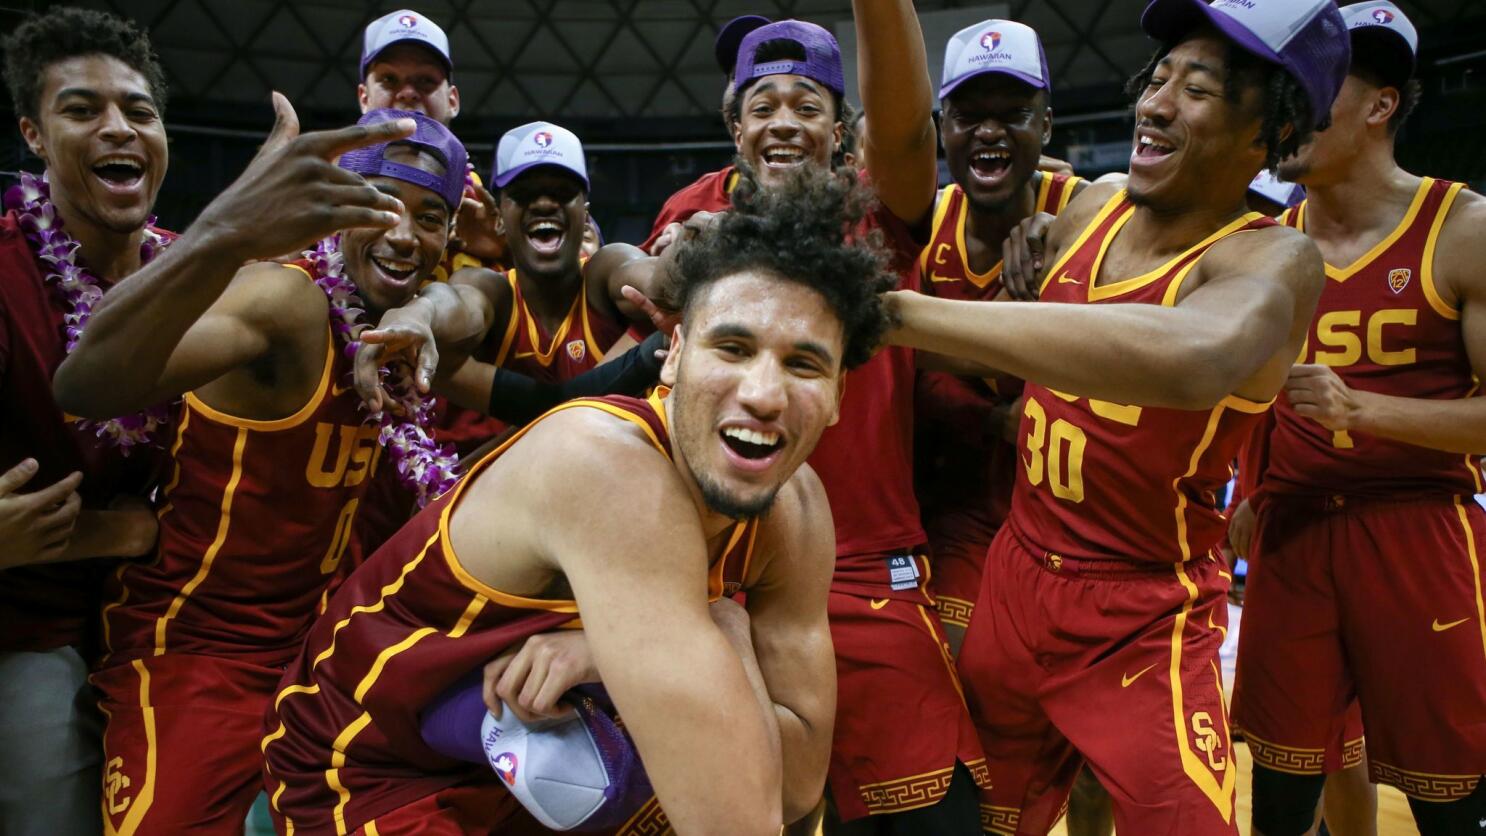 College basketball scandal updates: USC's De'Anthony Melton suspended 